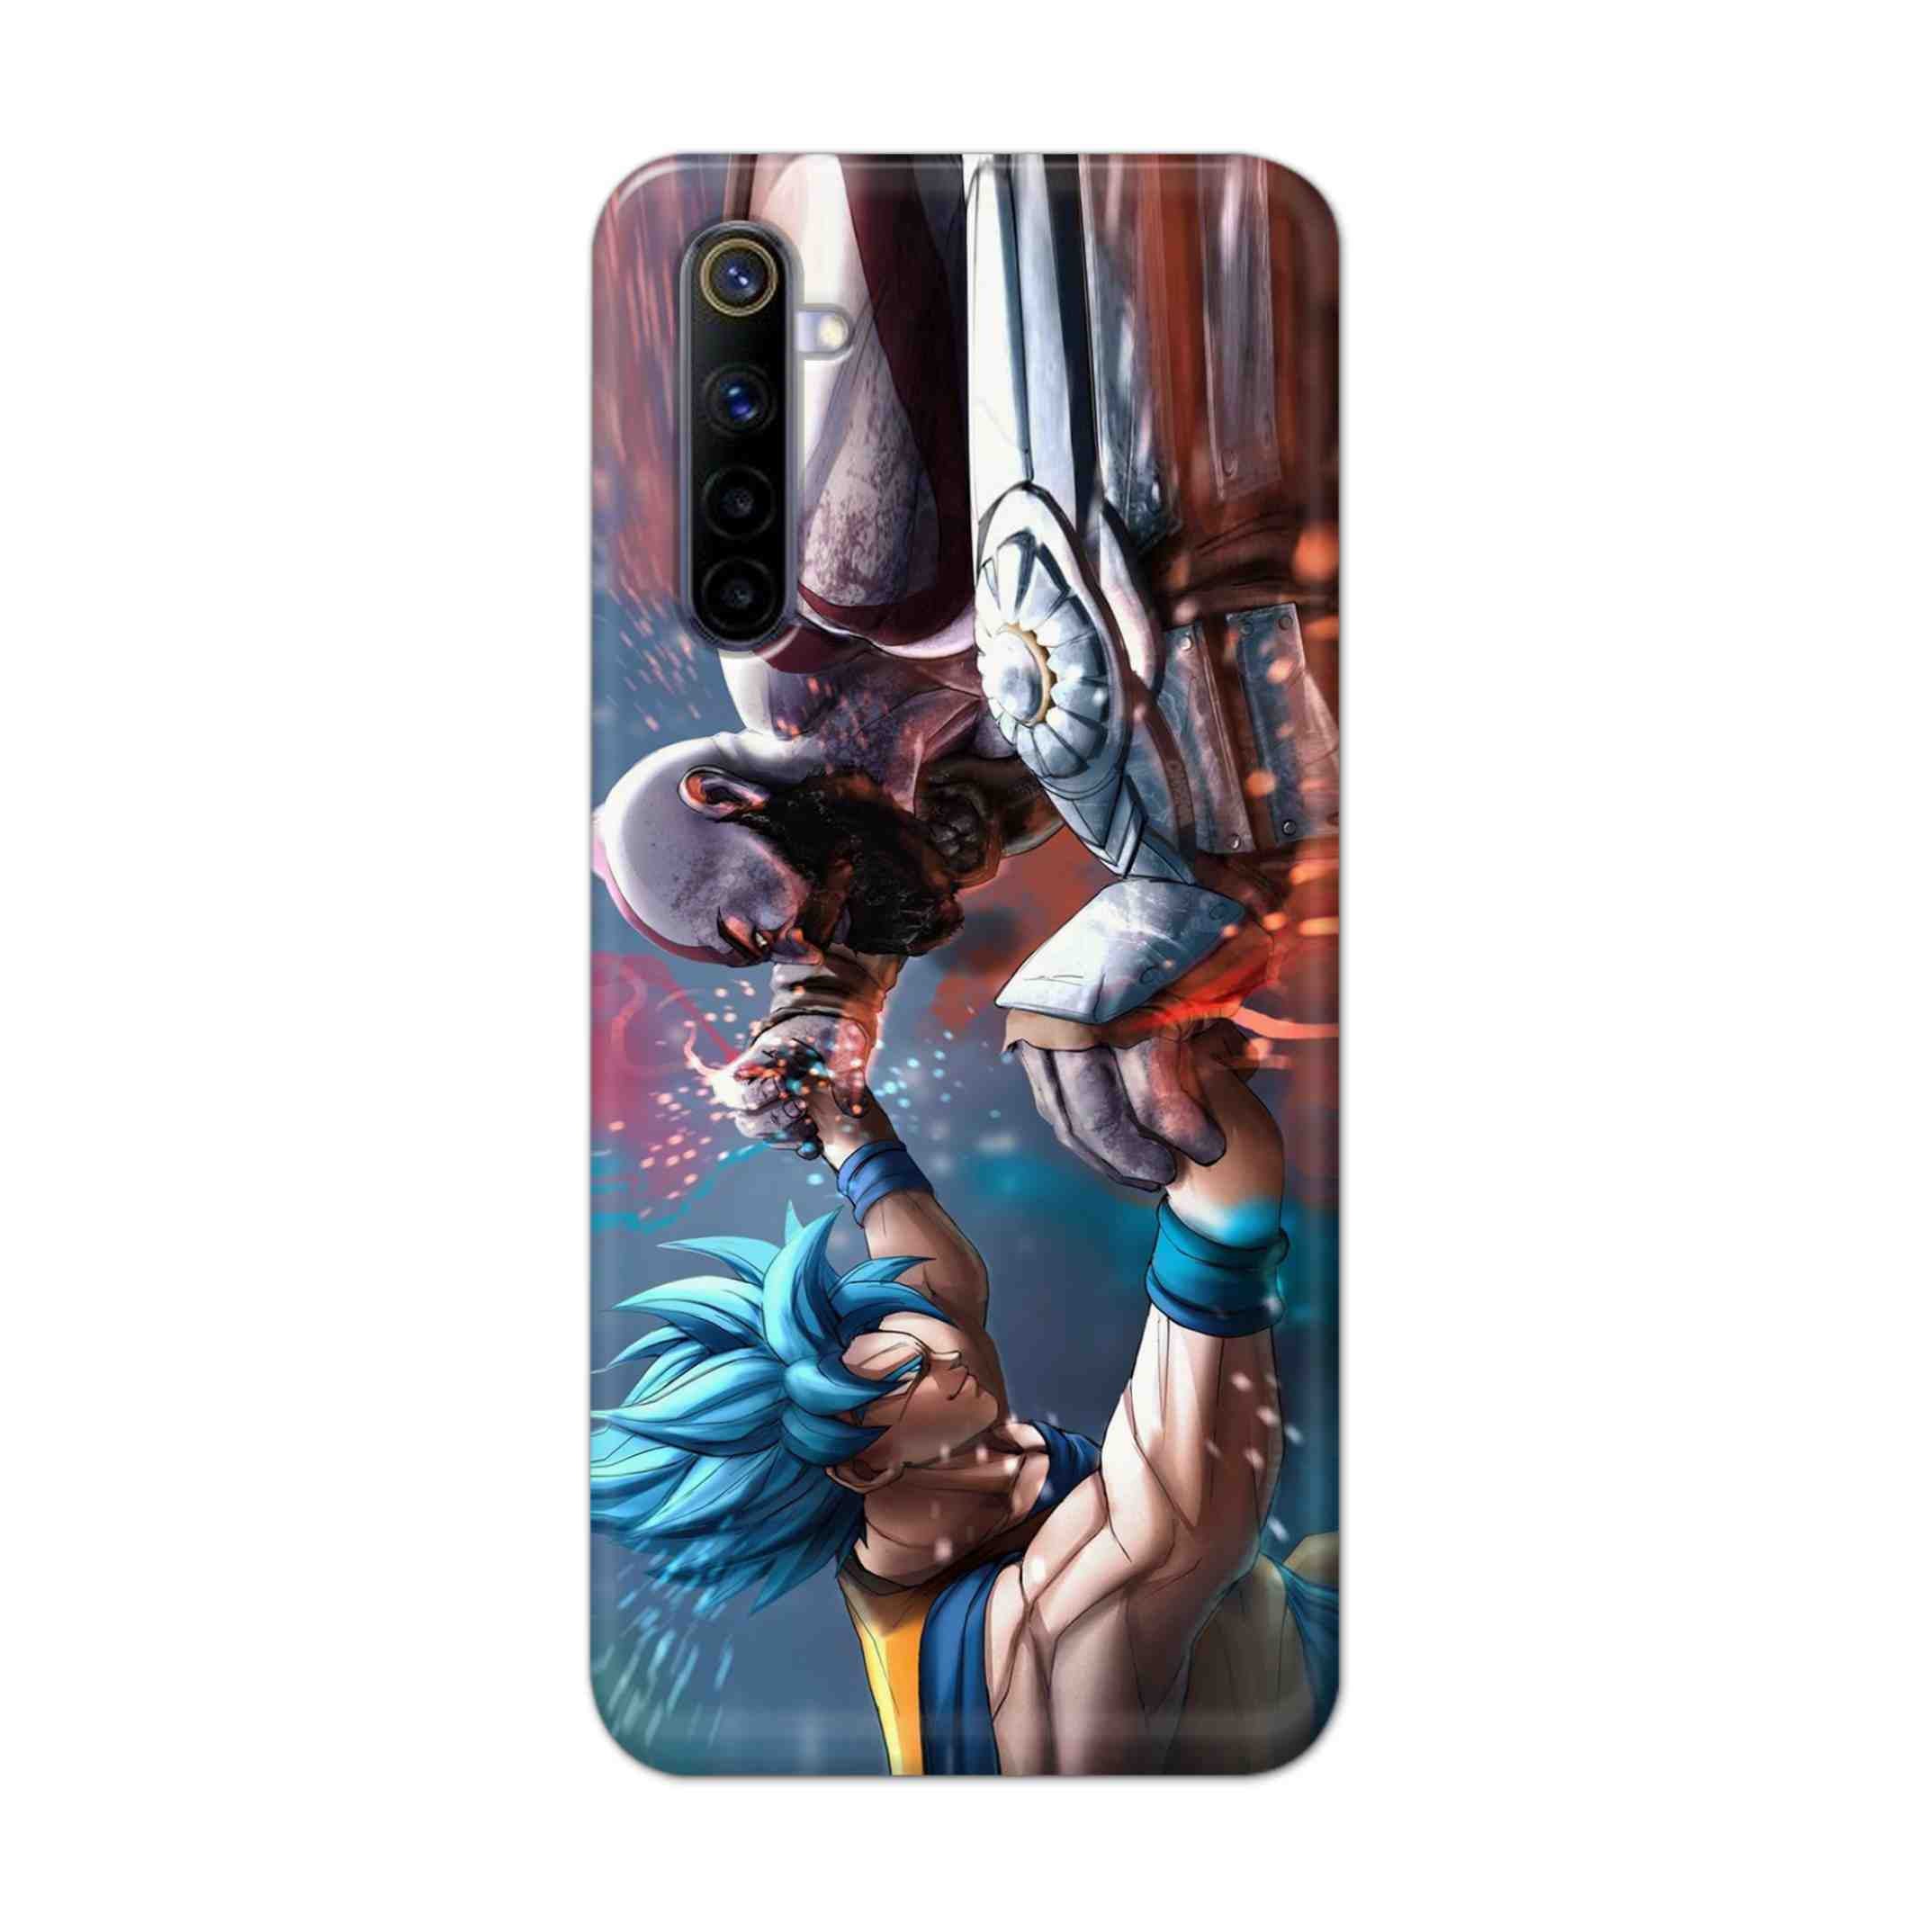 Buy Goku Vs Kratos Hard Back Mobile Phone Case Cover For REALME 6 Online